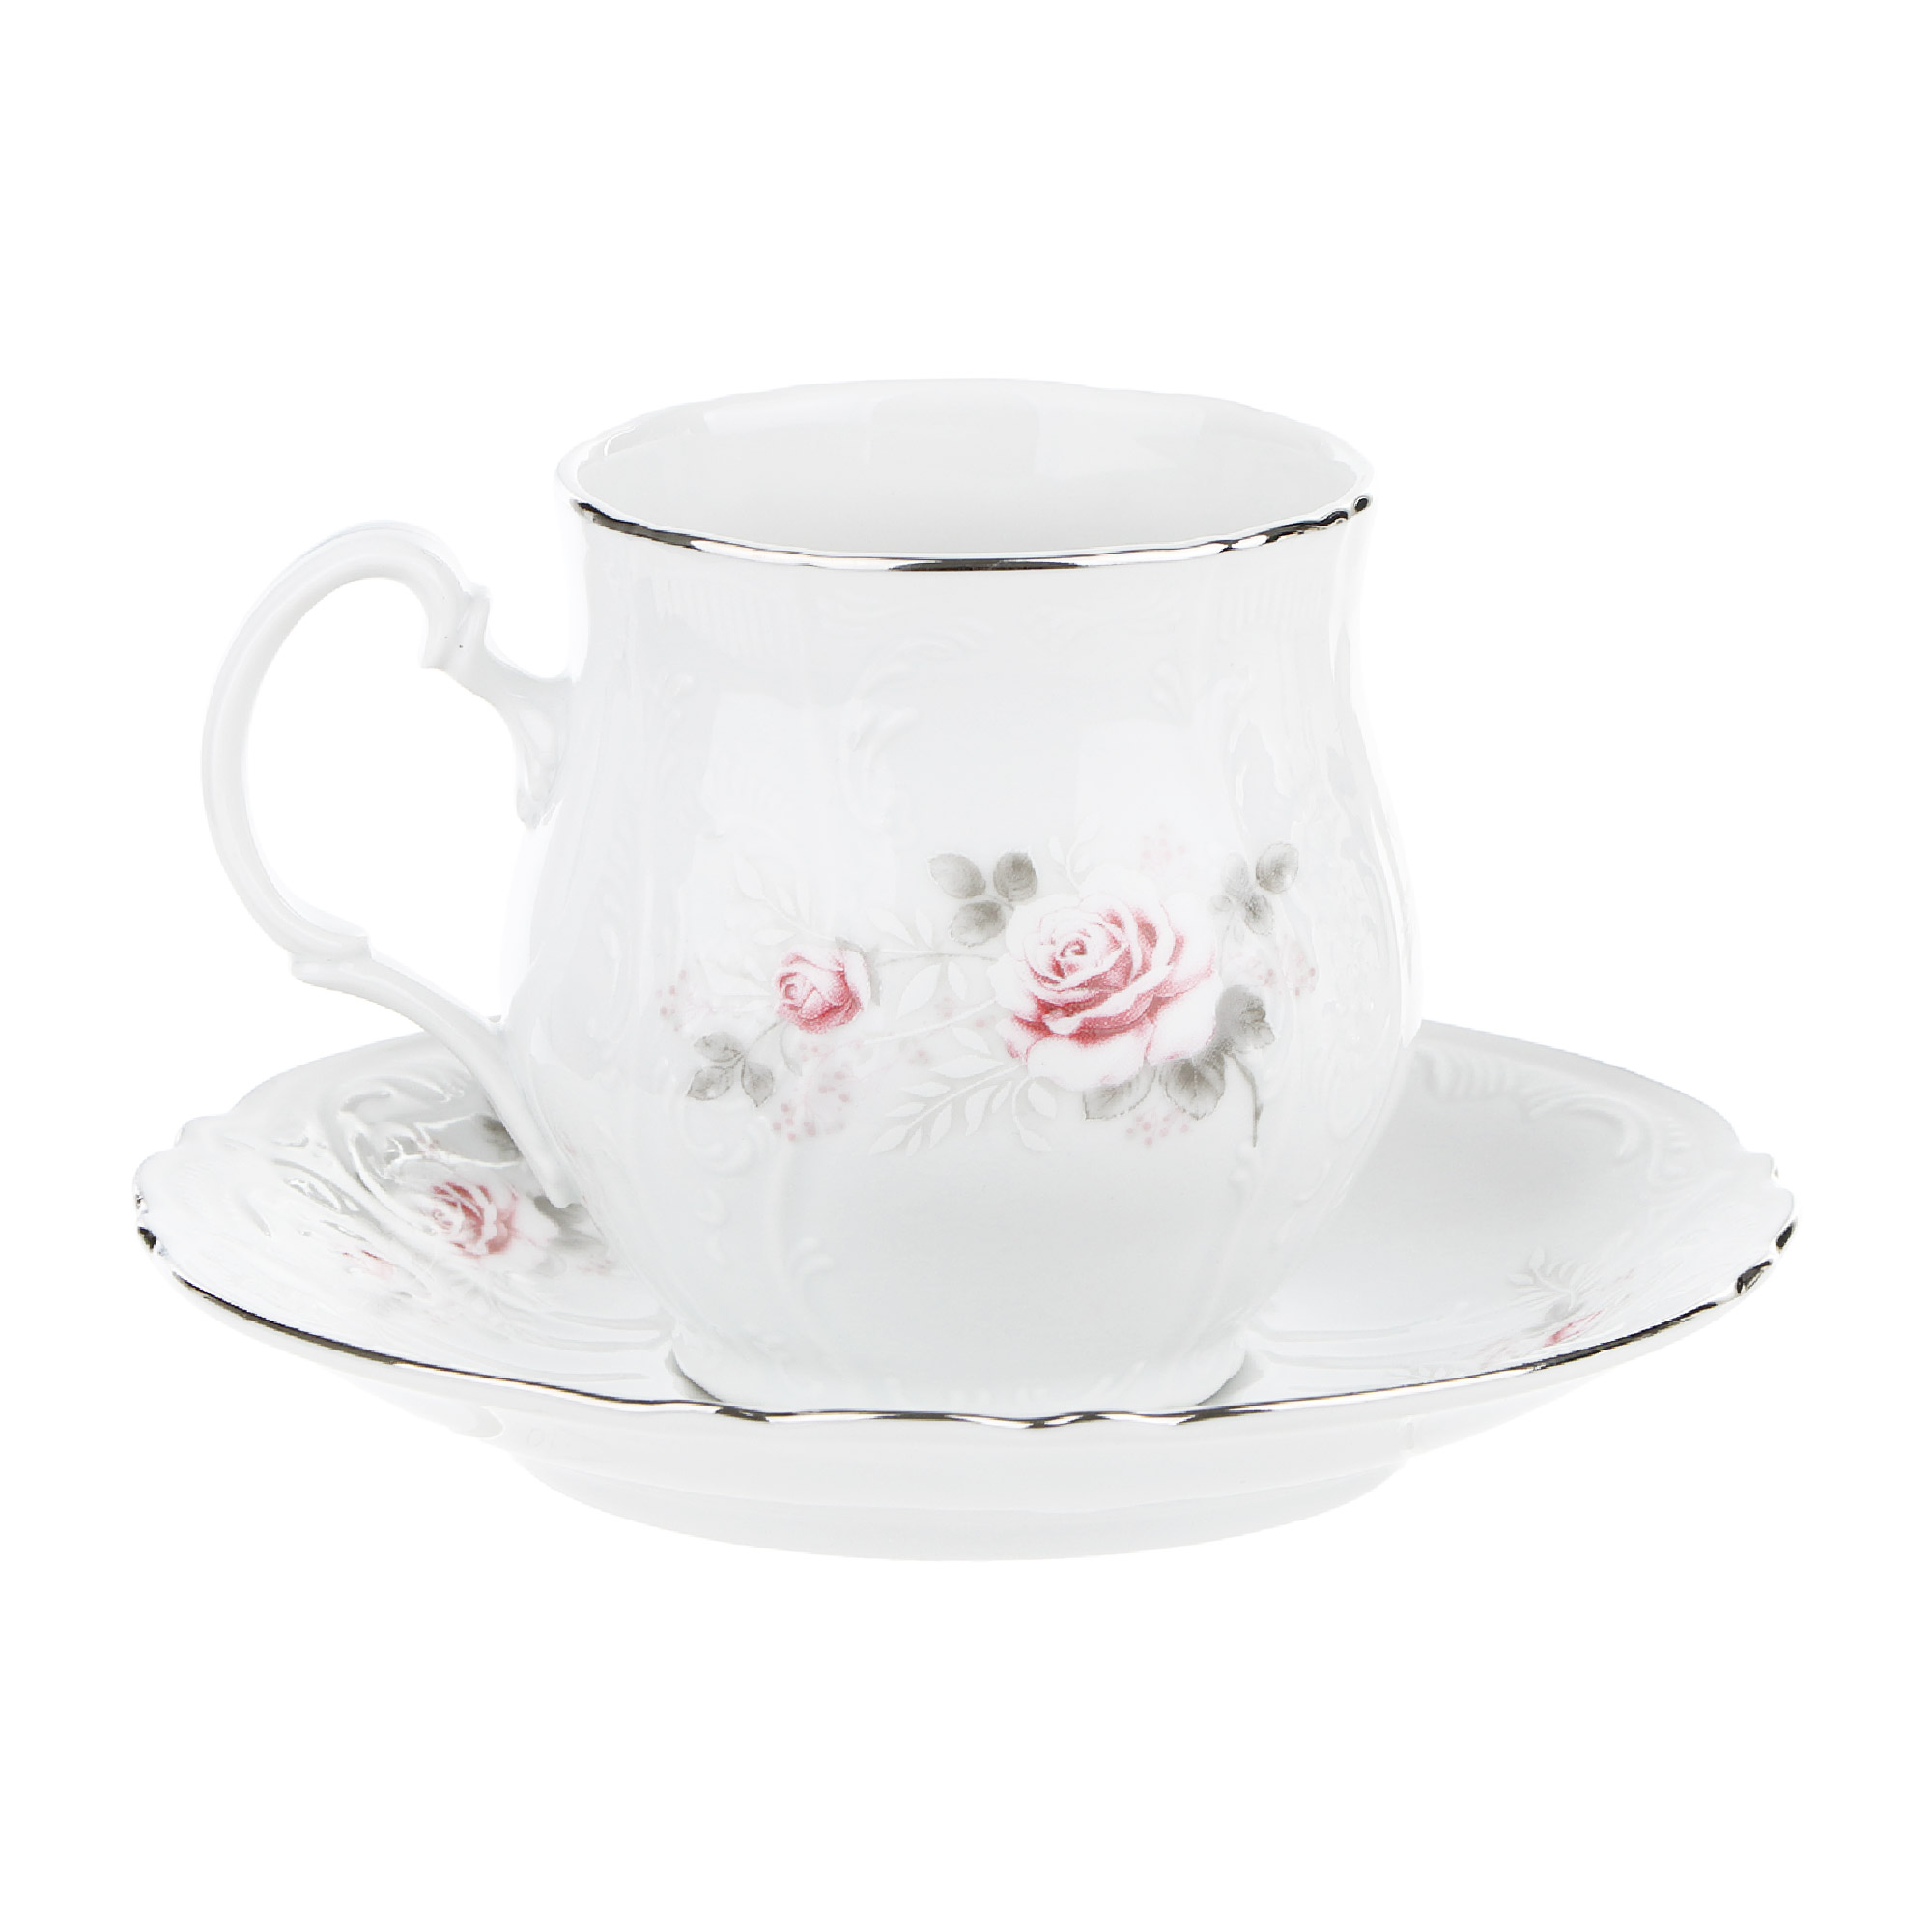 Чашка для чая 250 мл с блюдцем; декор Бледные розы, отводка платина Thun1794 чашка для бульона с блюдцем 170 мм декор серый орнамент отводка платина thun1794